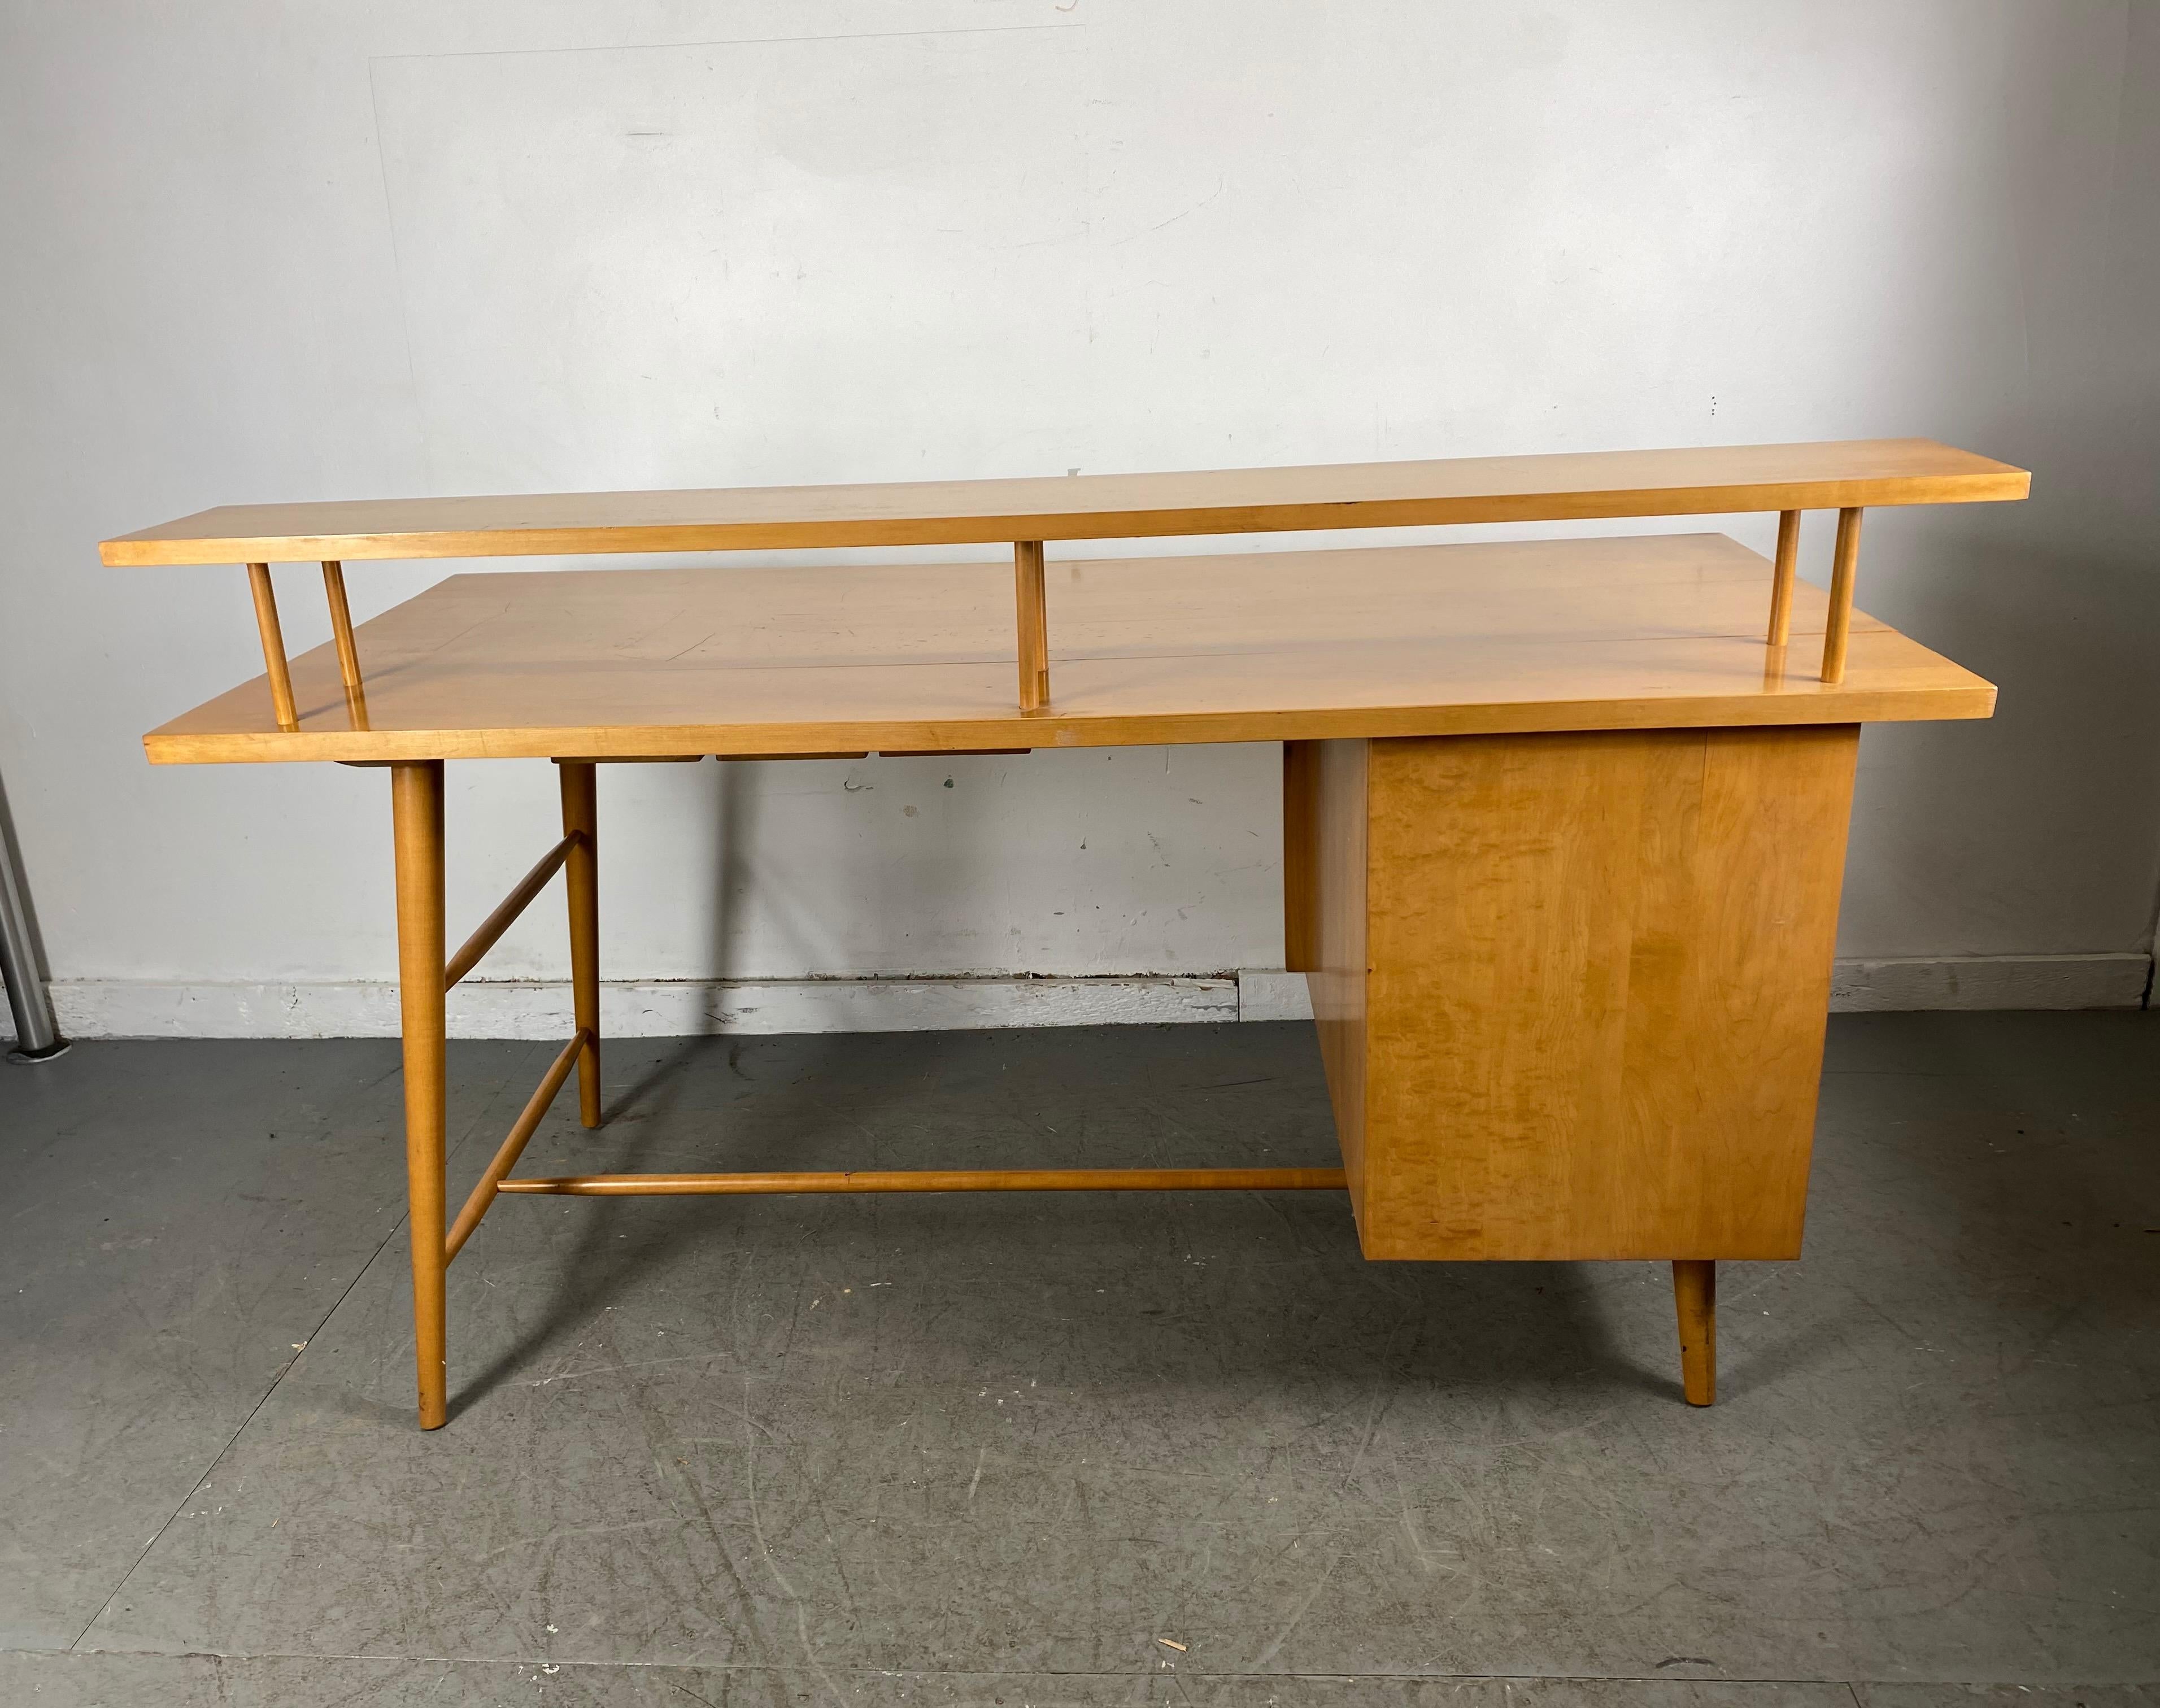 Rare Paul McCobb Desk in Maple, 1950s, Multi-Level, Classic Modernist Design 1